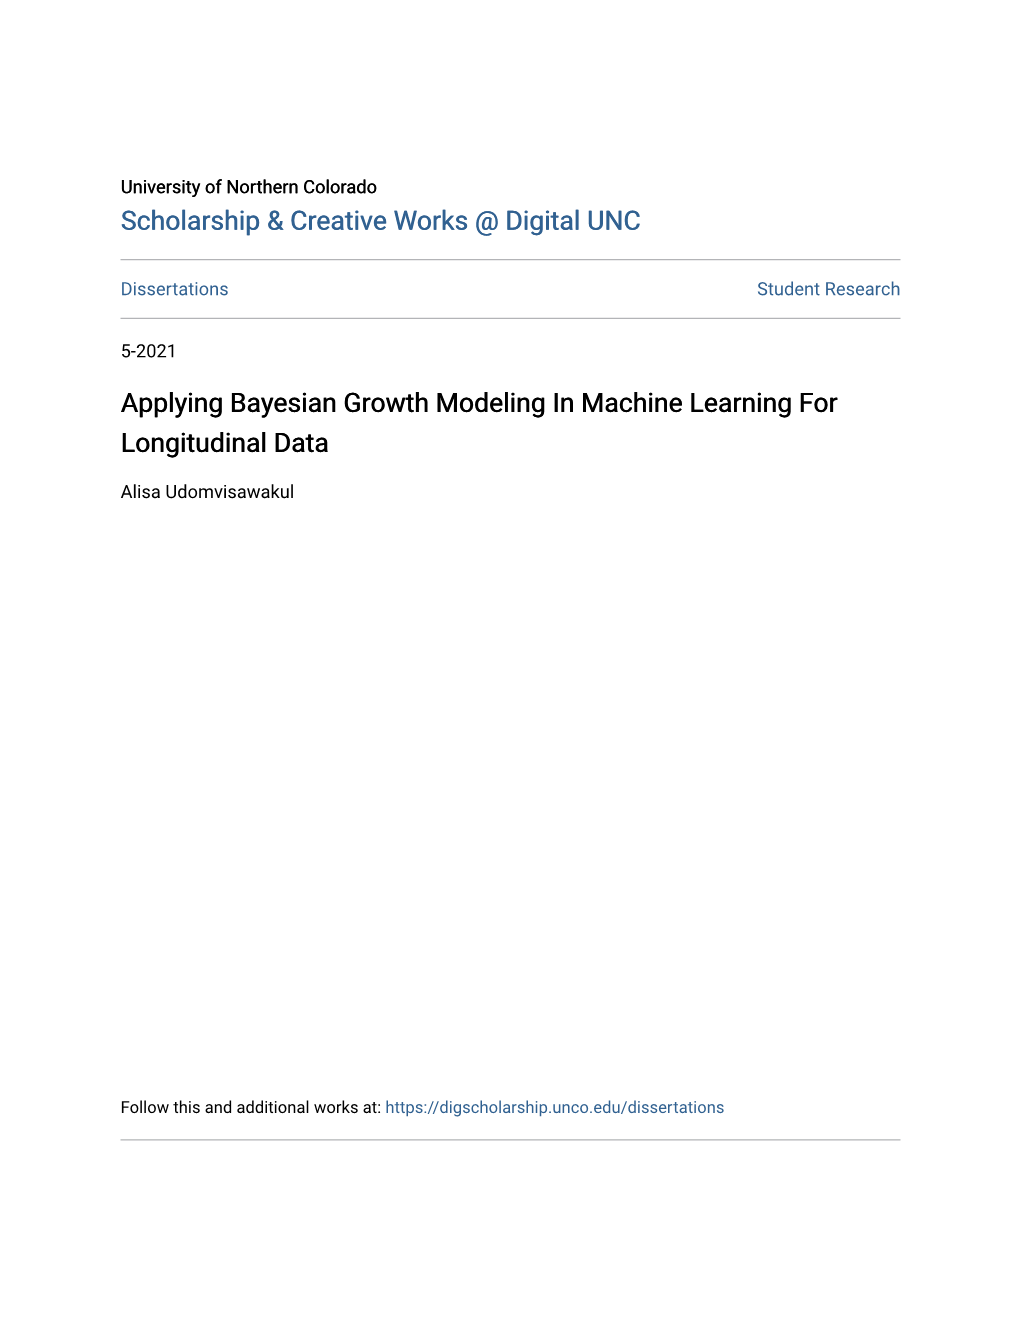 Applying Bayesian Growth Modeling in Machine Learning for Longitudinal Data